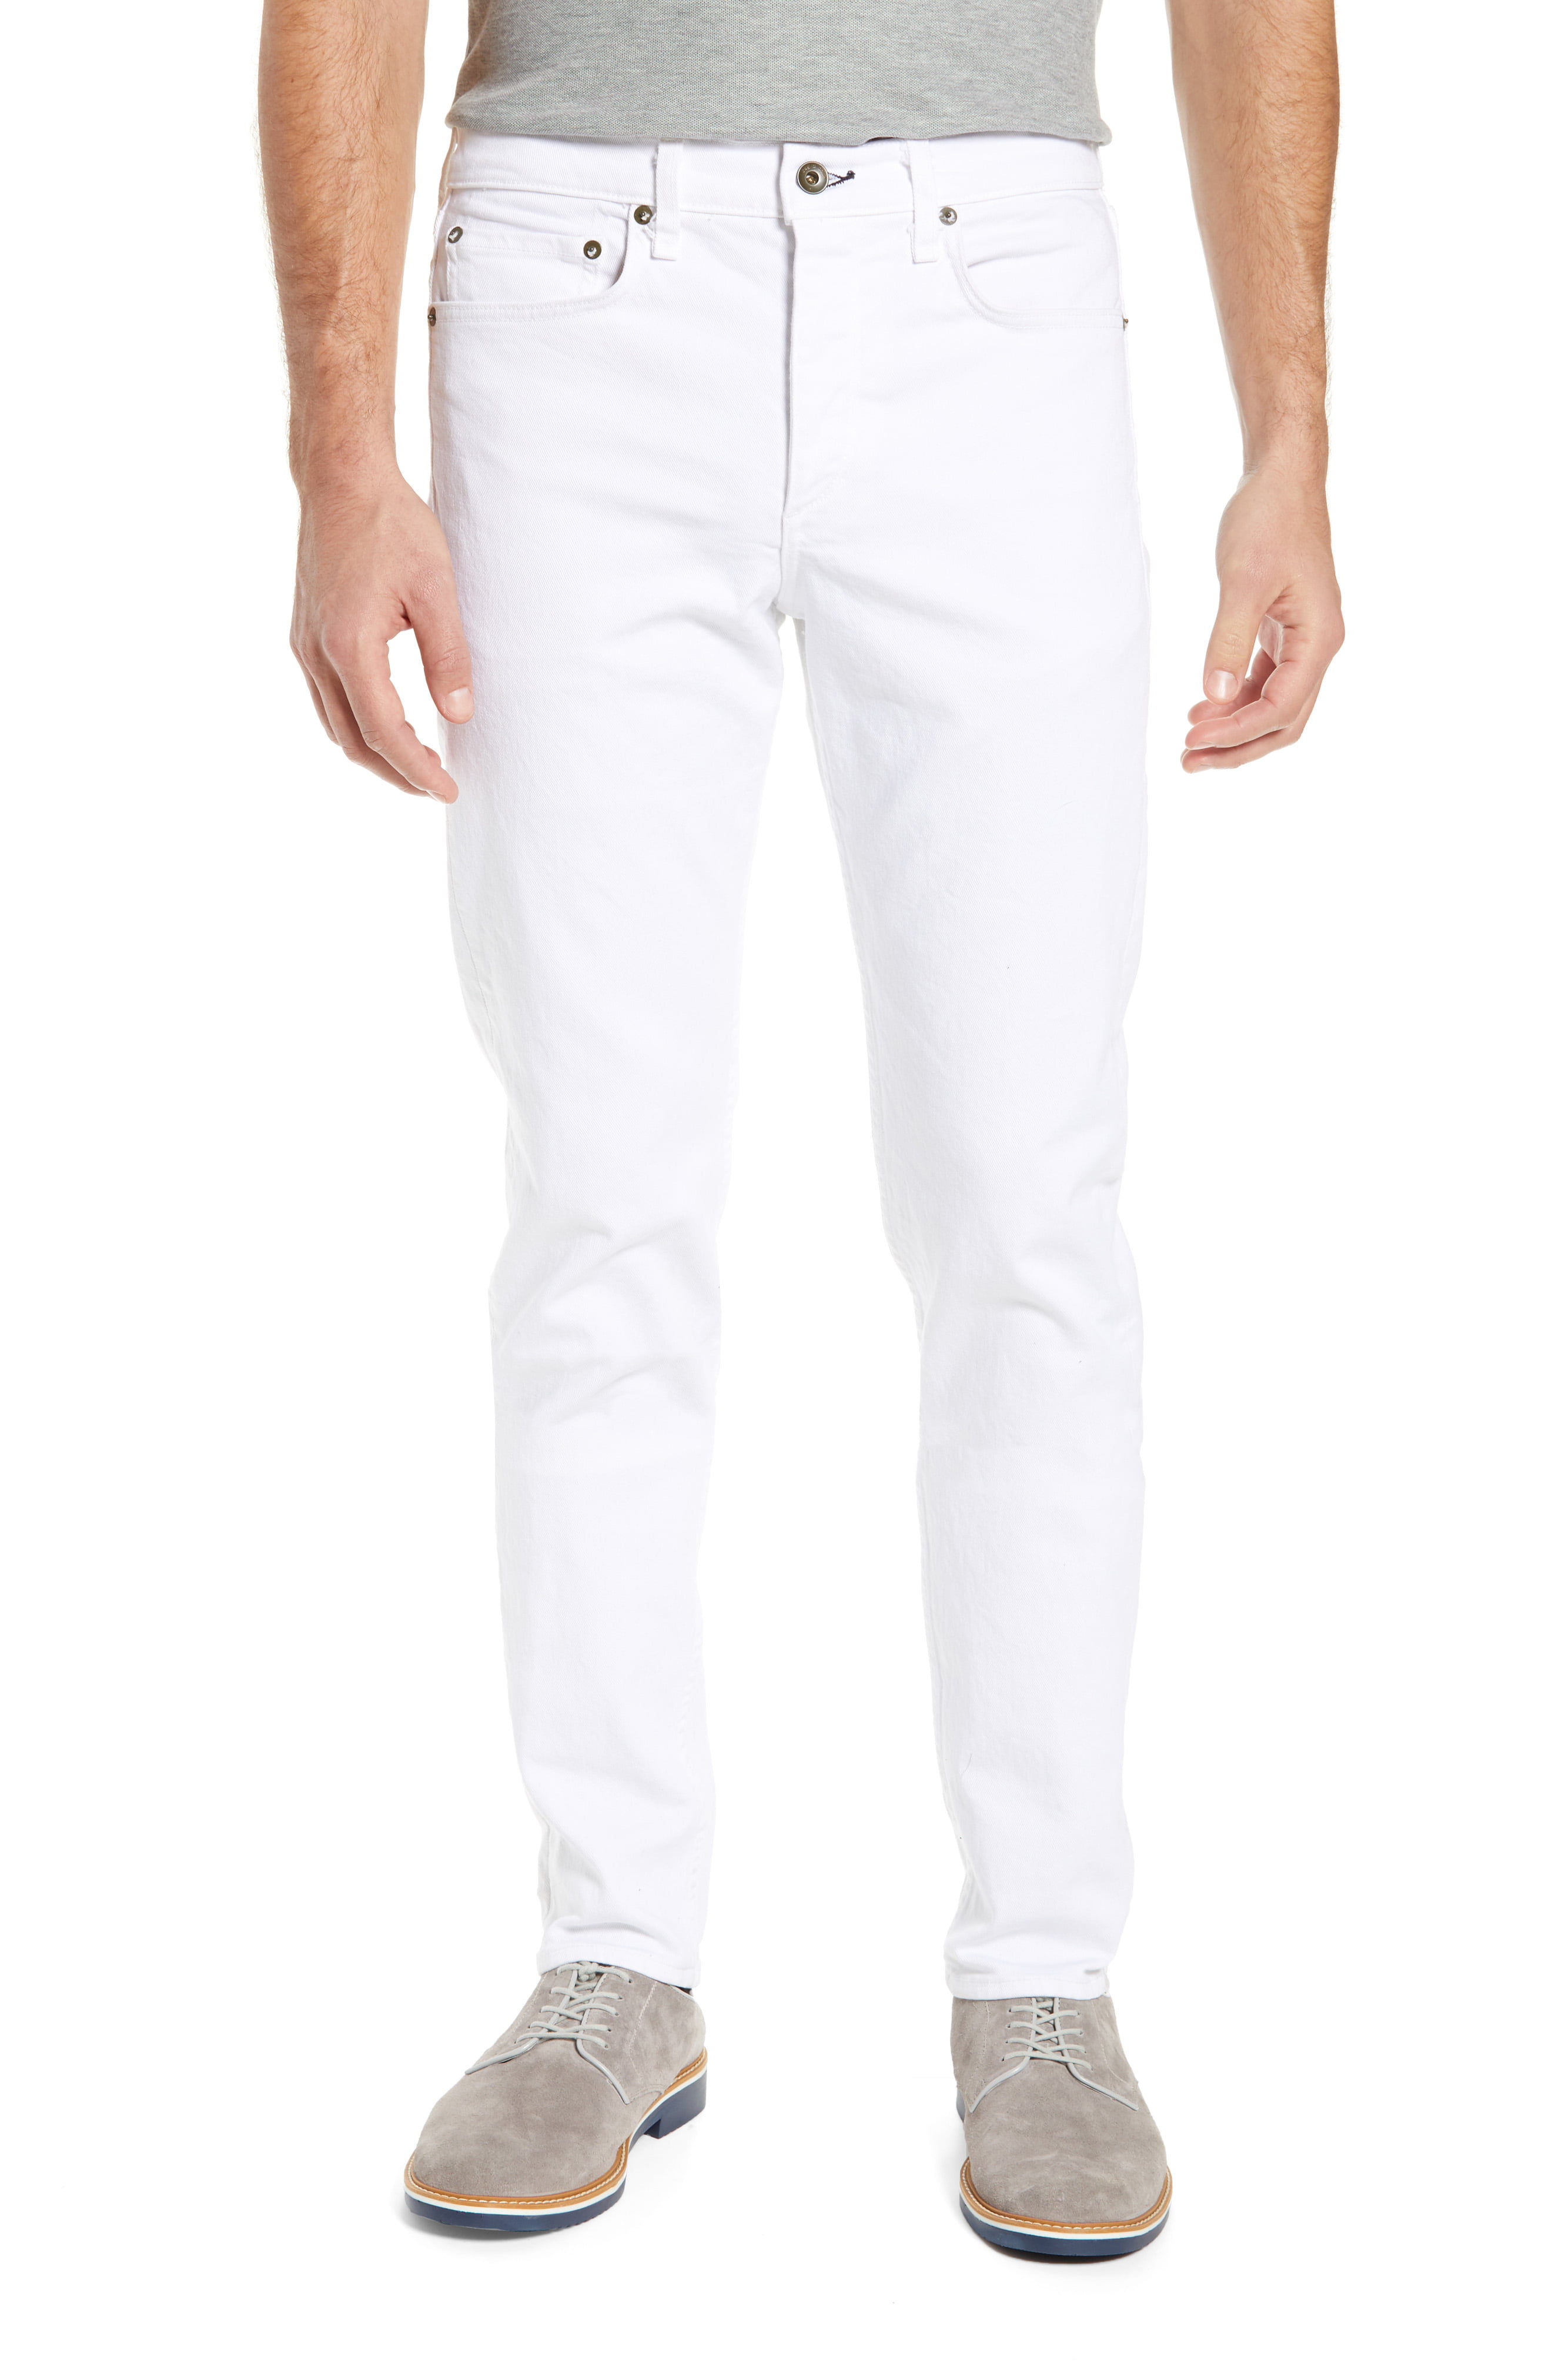 Men’s Rag & Bone Fit 2 Slim Fit Jeans, Size 28 – White | The Fashionisto